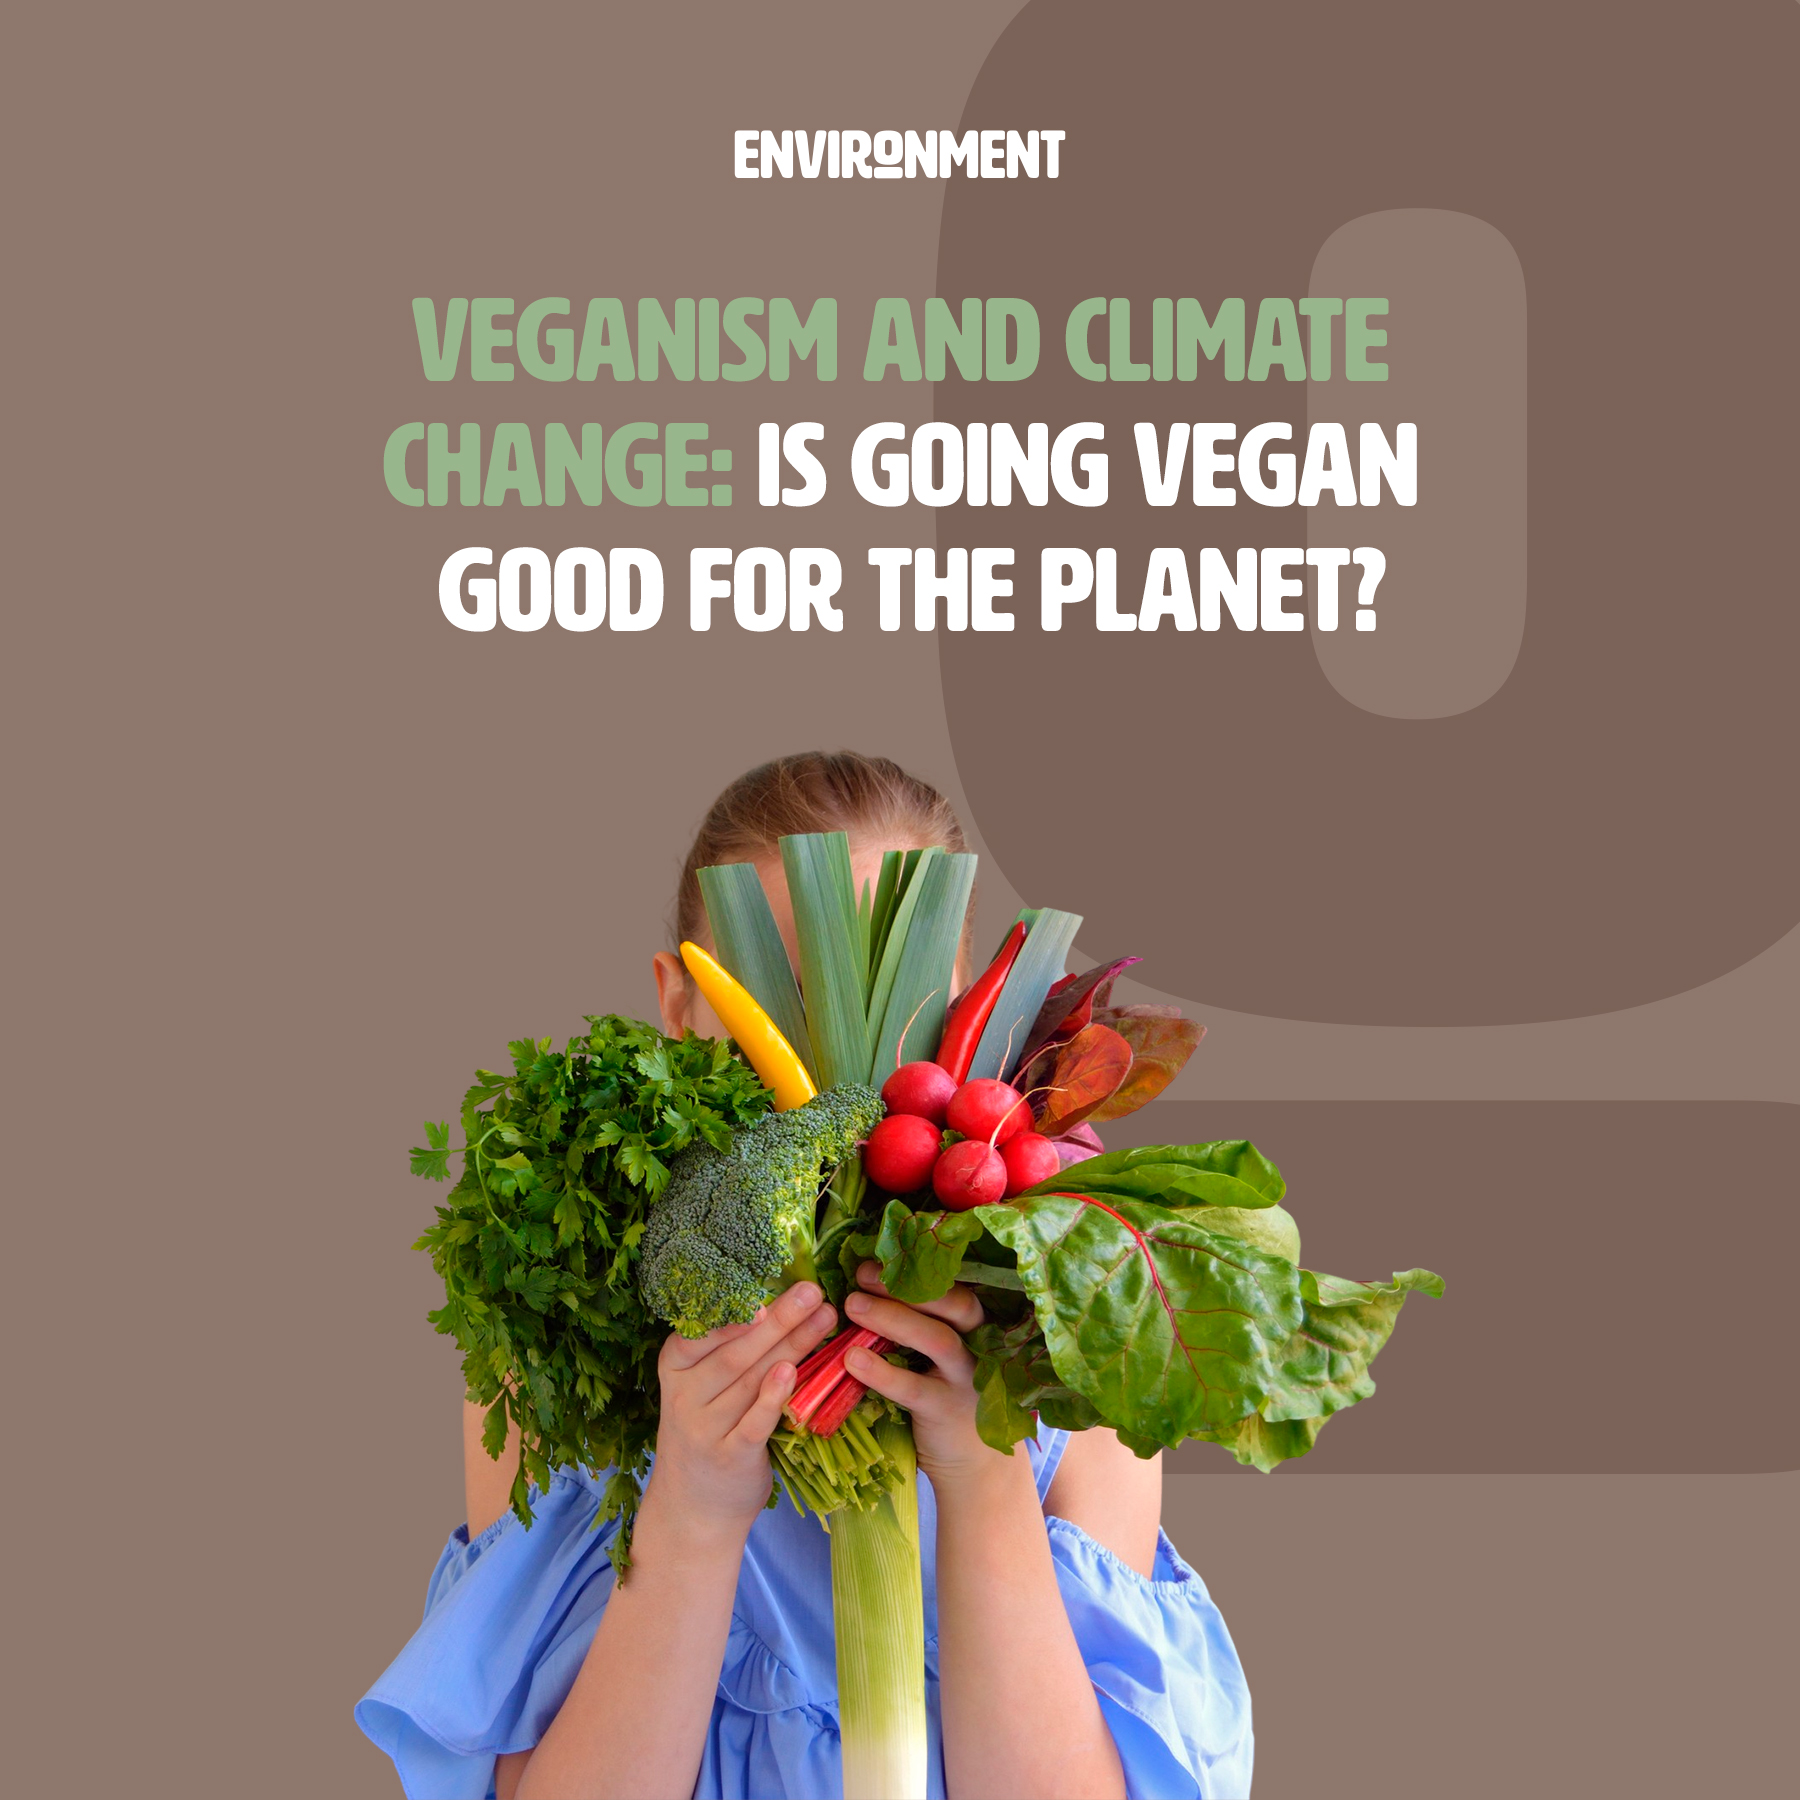 Vegan for the environment / planet